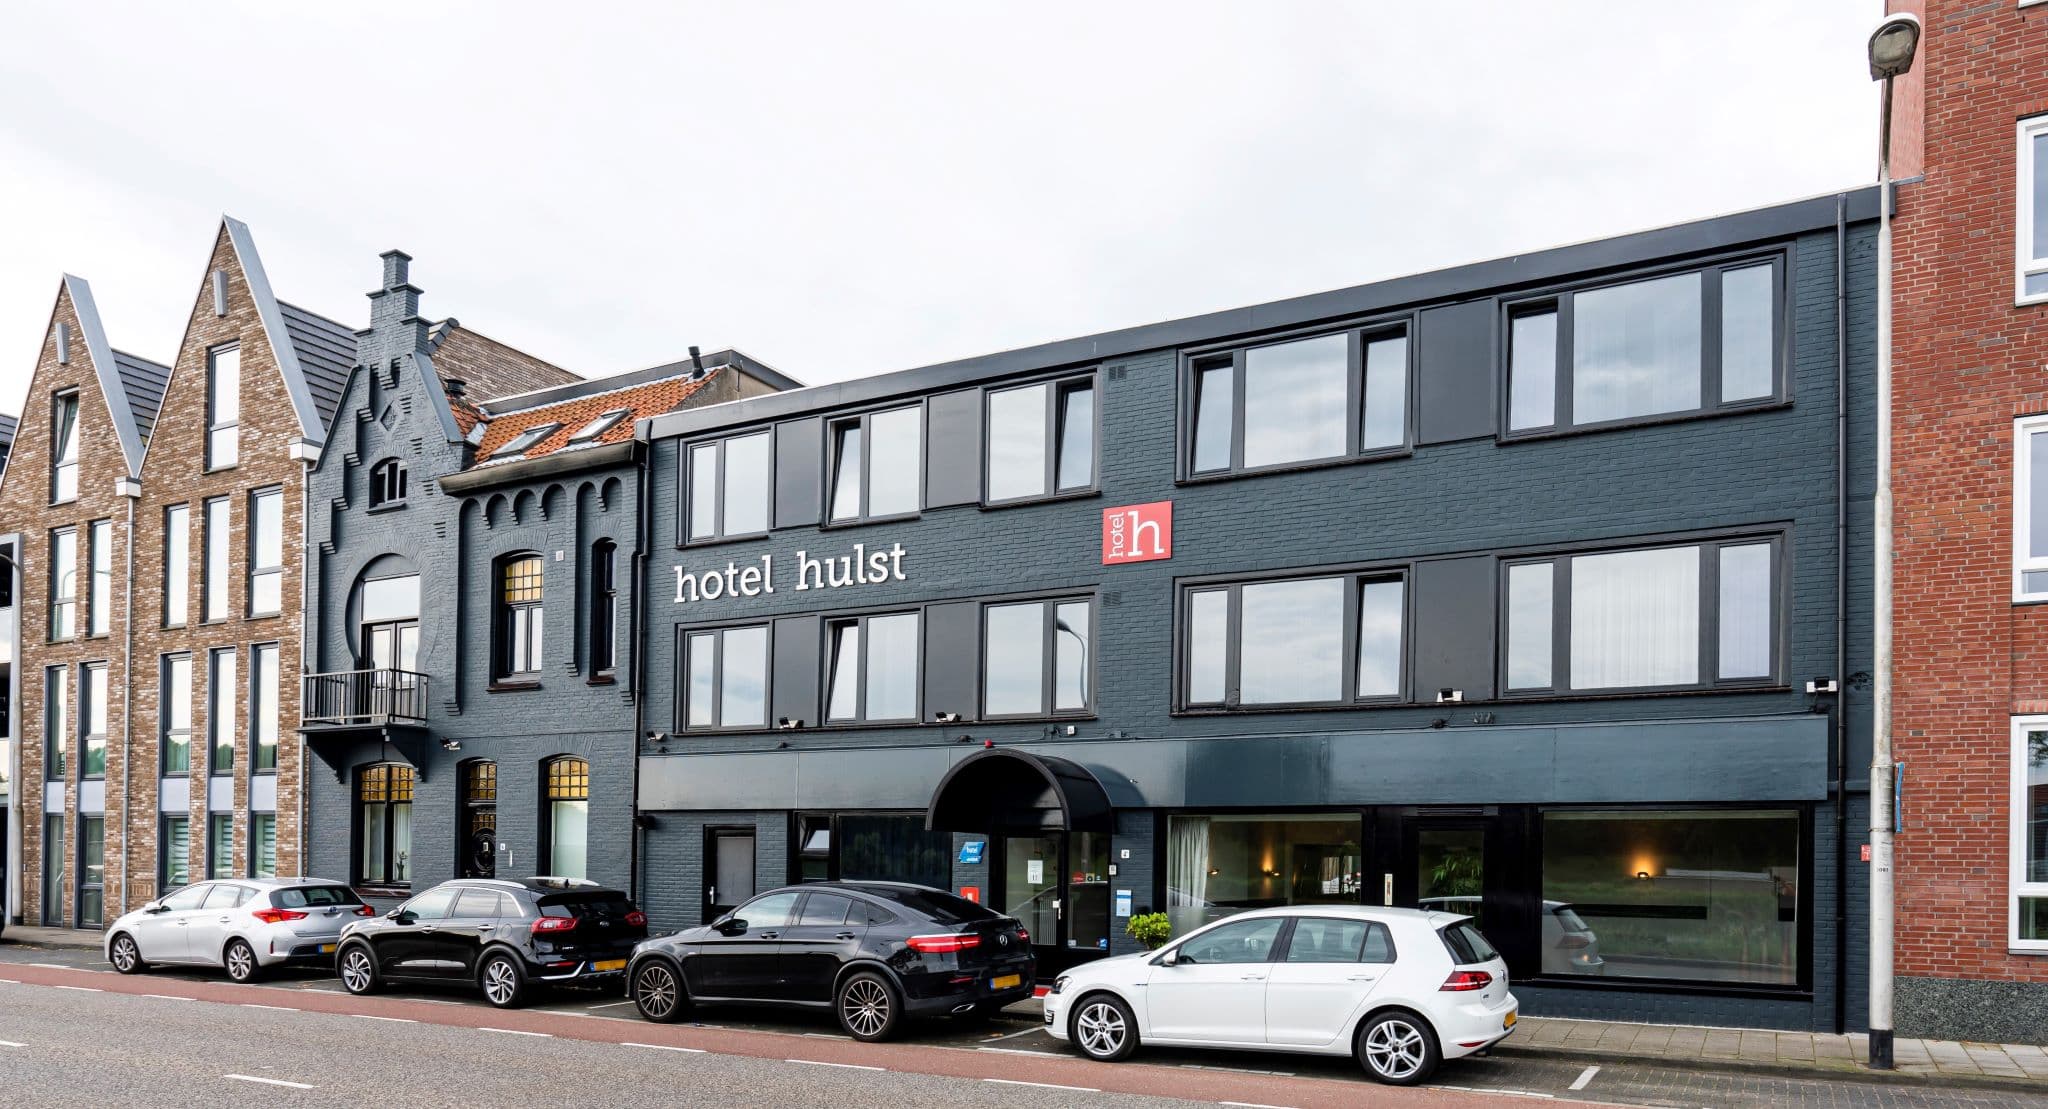 Hotel Hulst